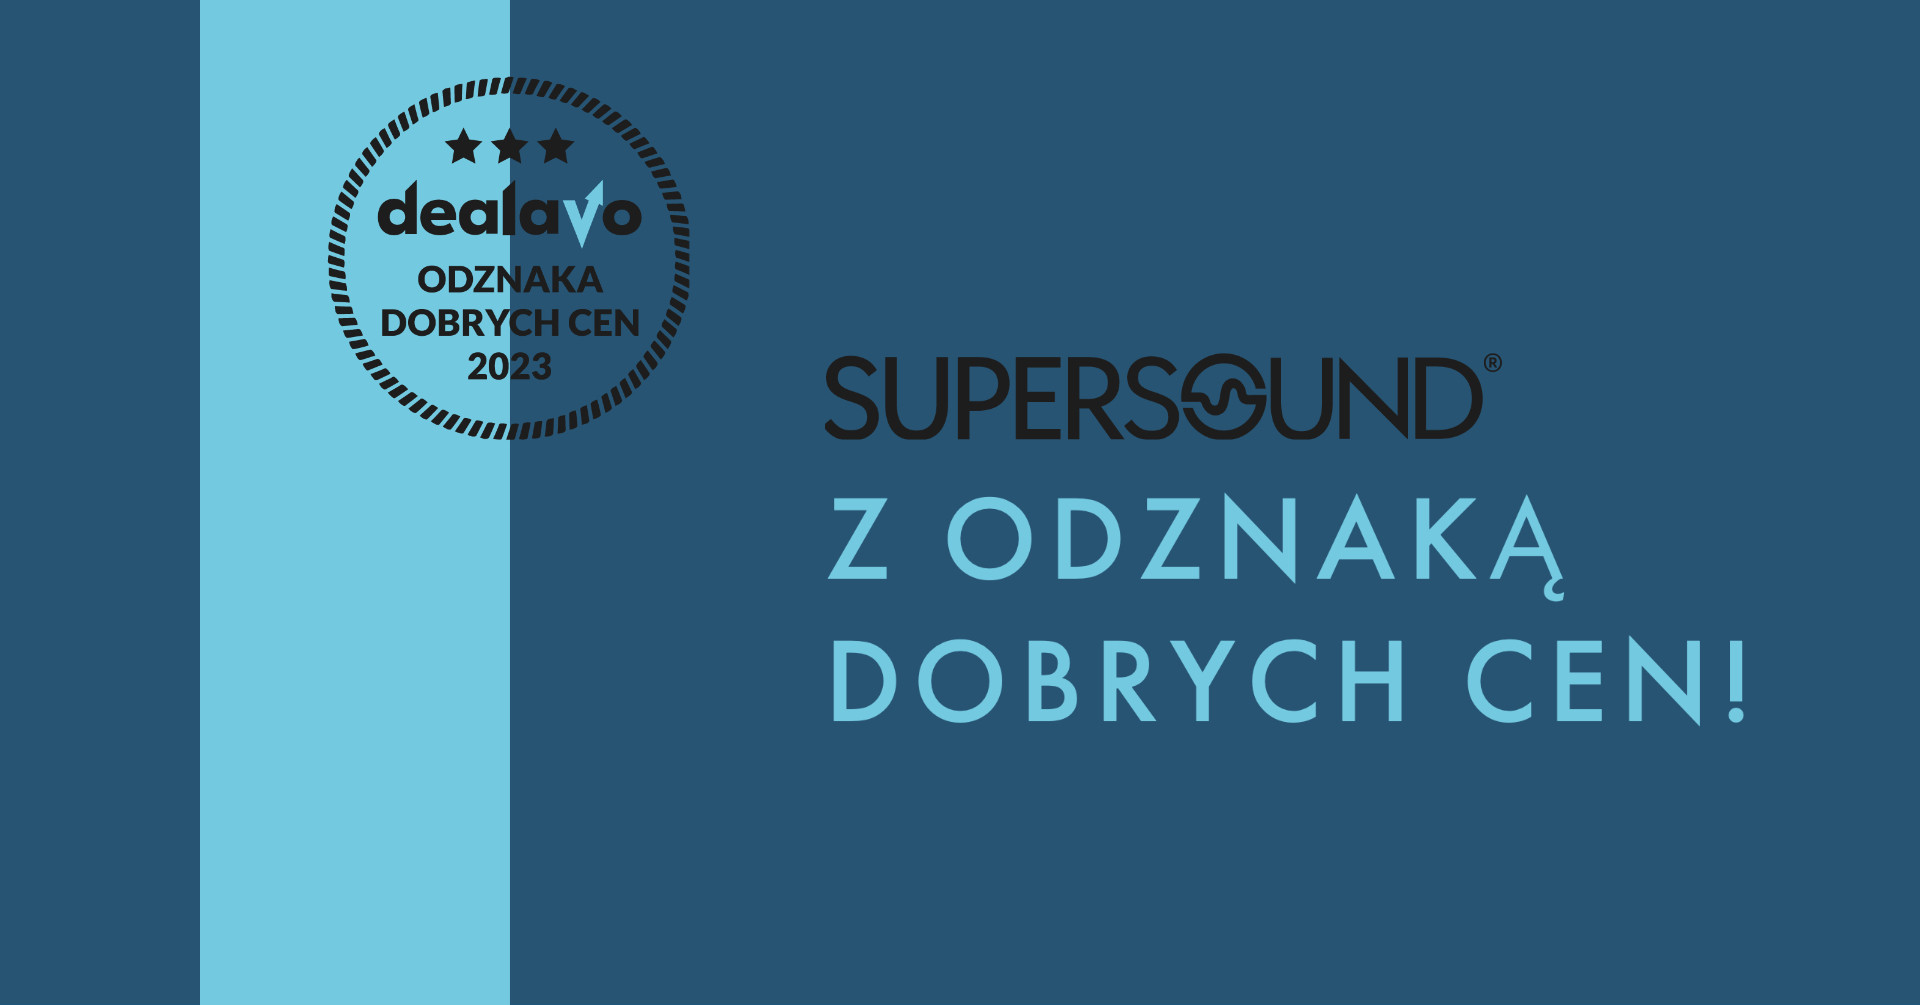 Supersound.pl z Odznaką Dobrych Cen 2023 